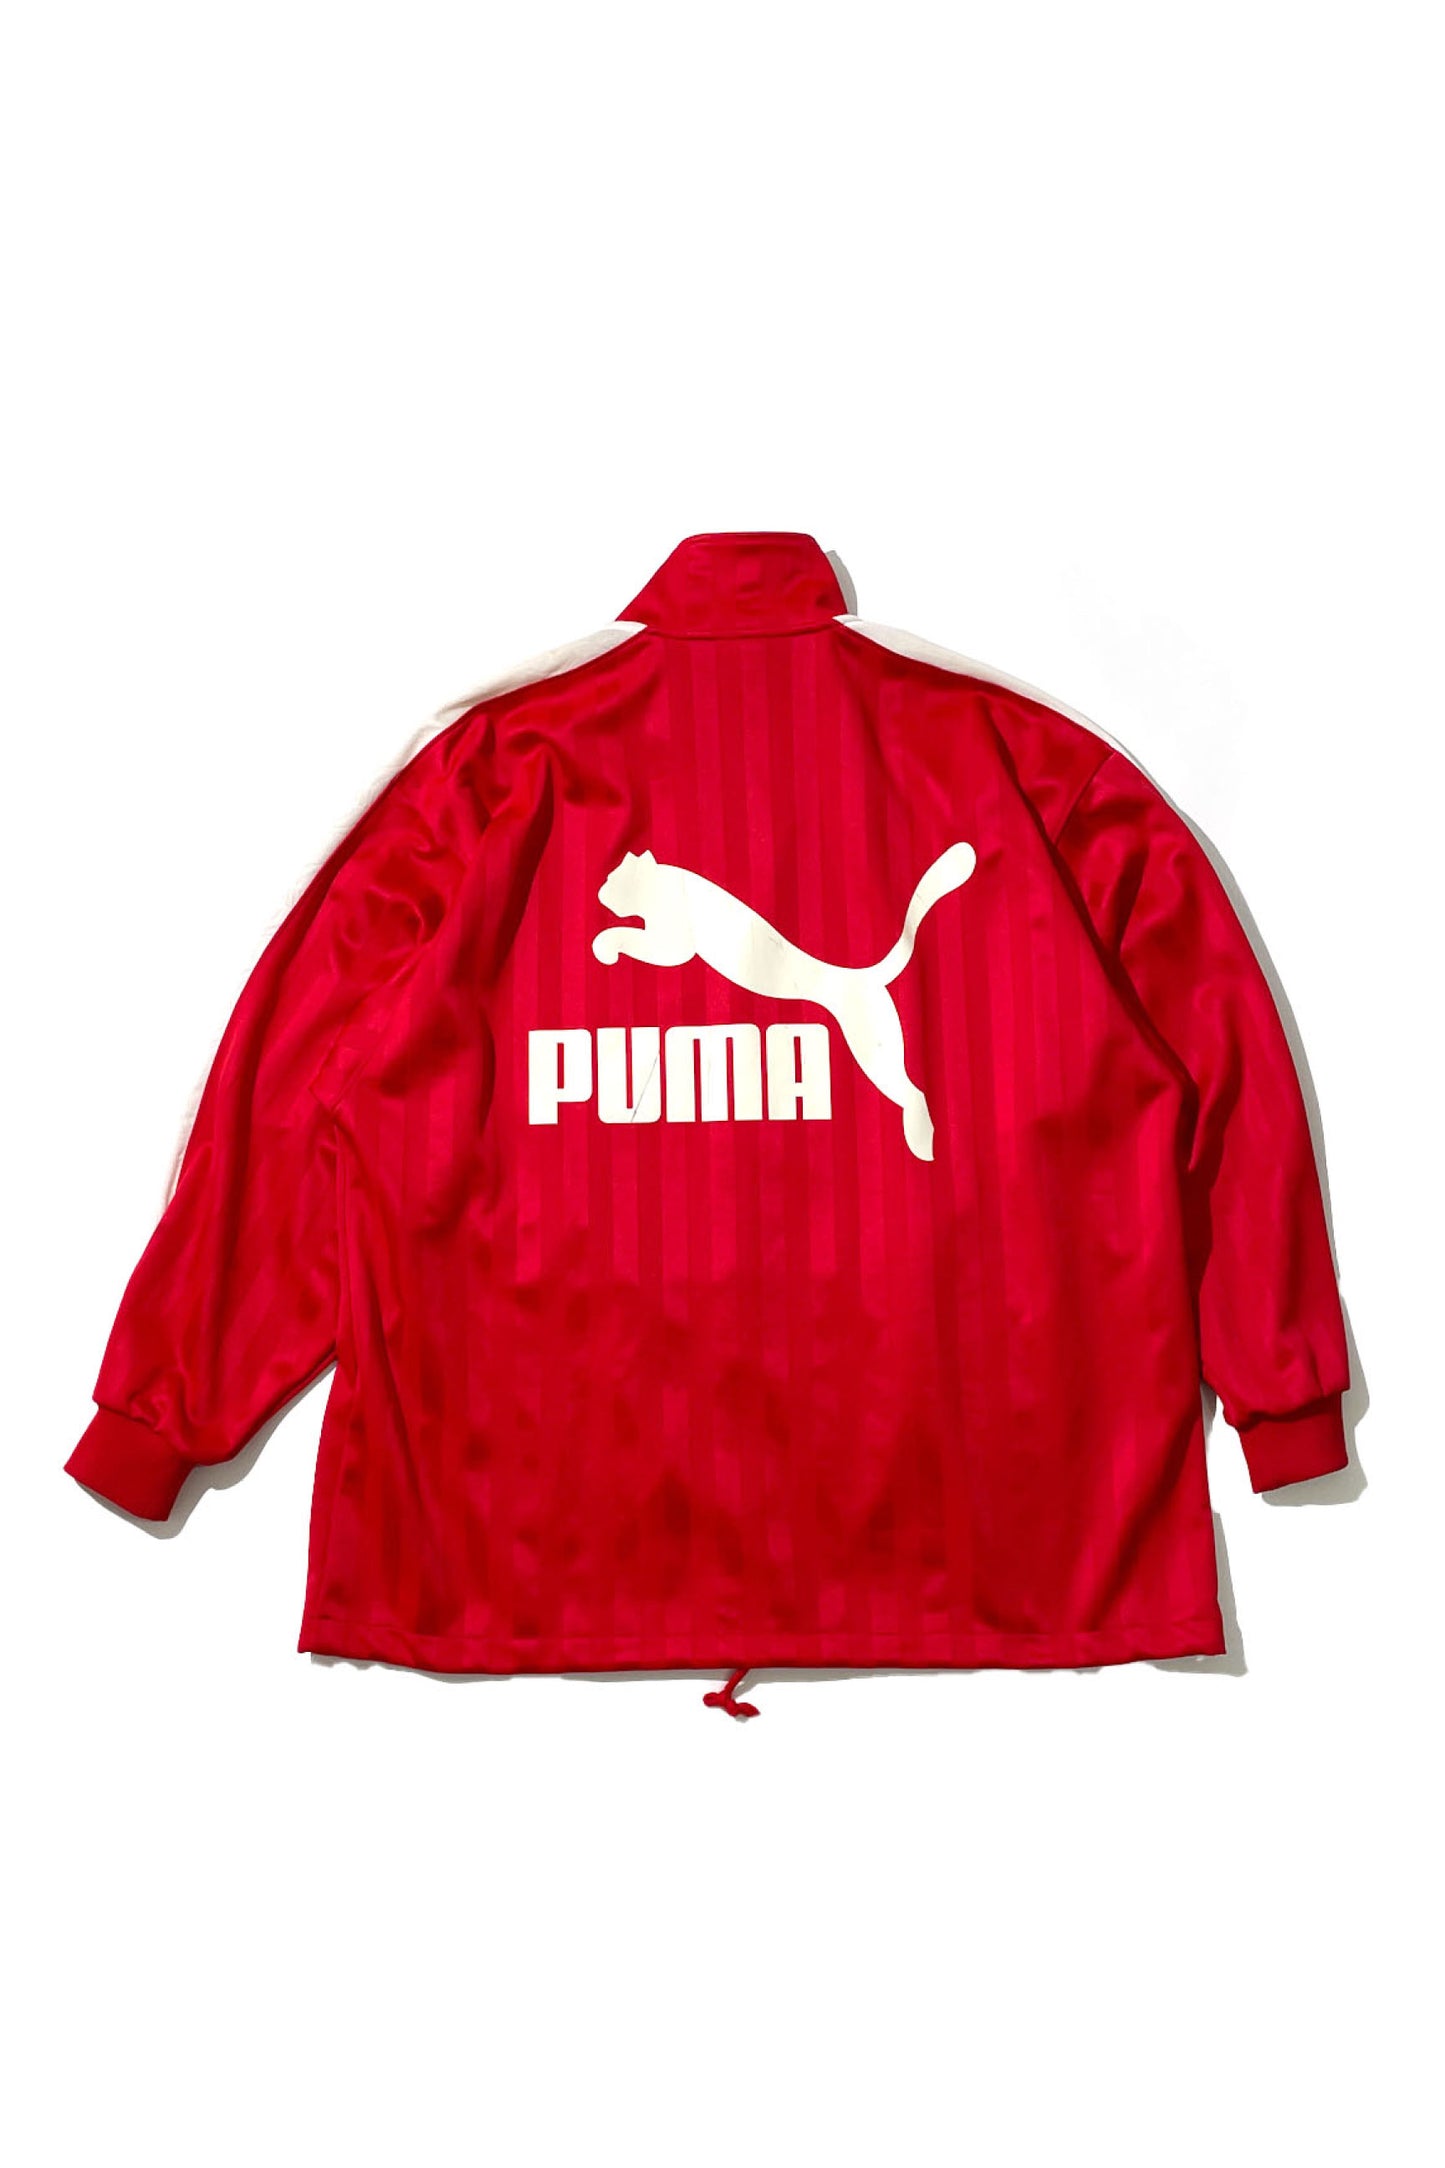 90's~00's PUMA track jacket